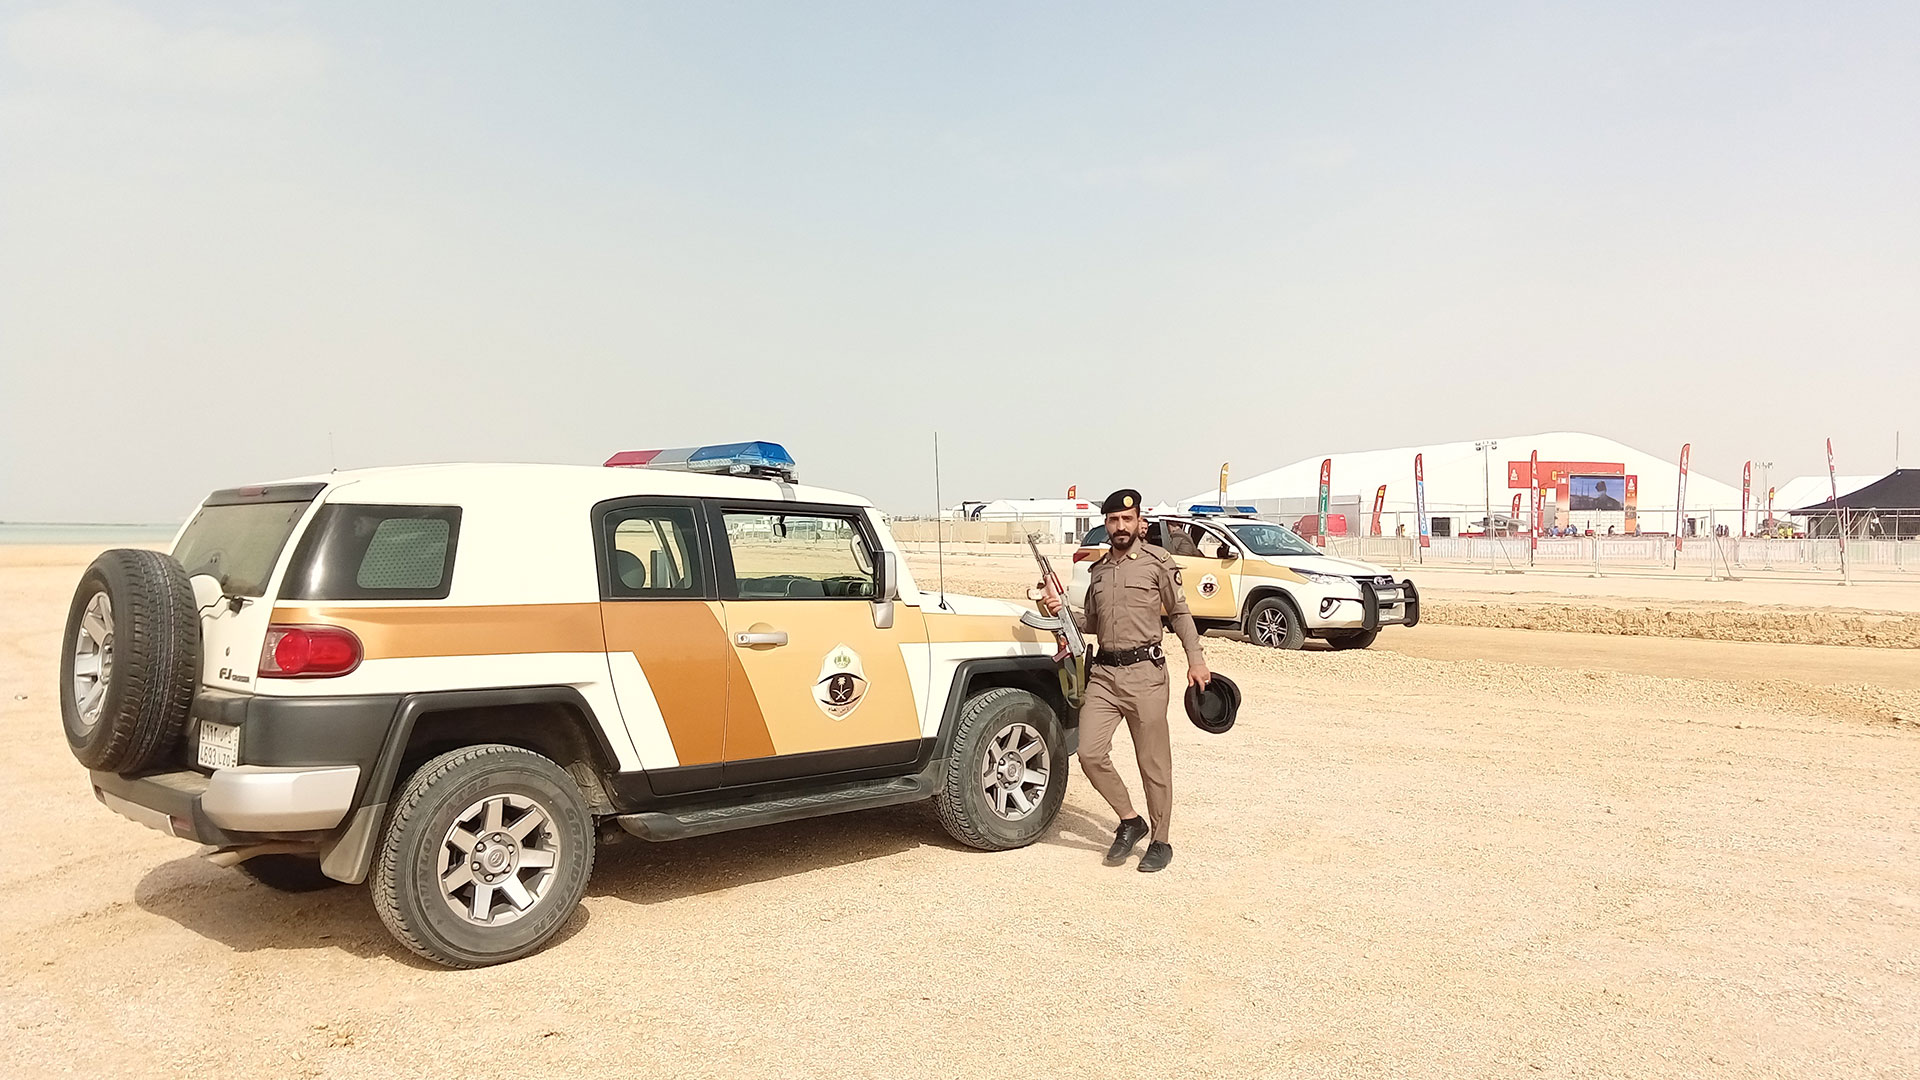 Police custody is located every kilometer around the perimeter of the camp